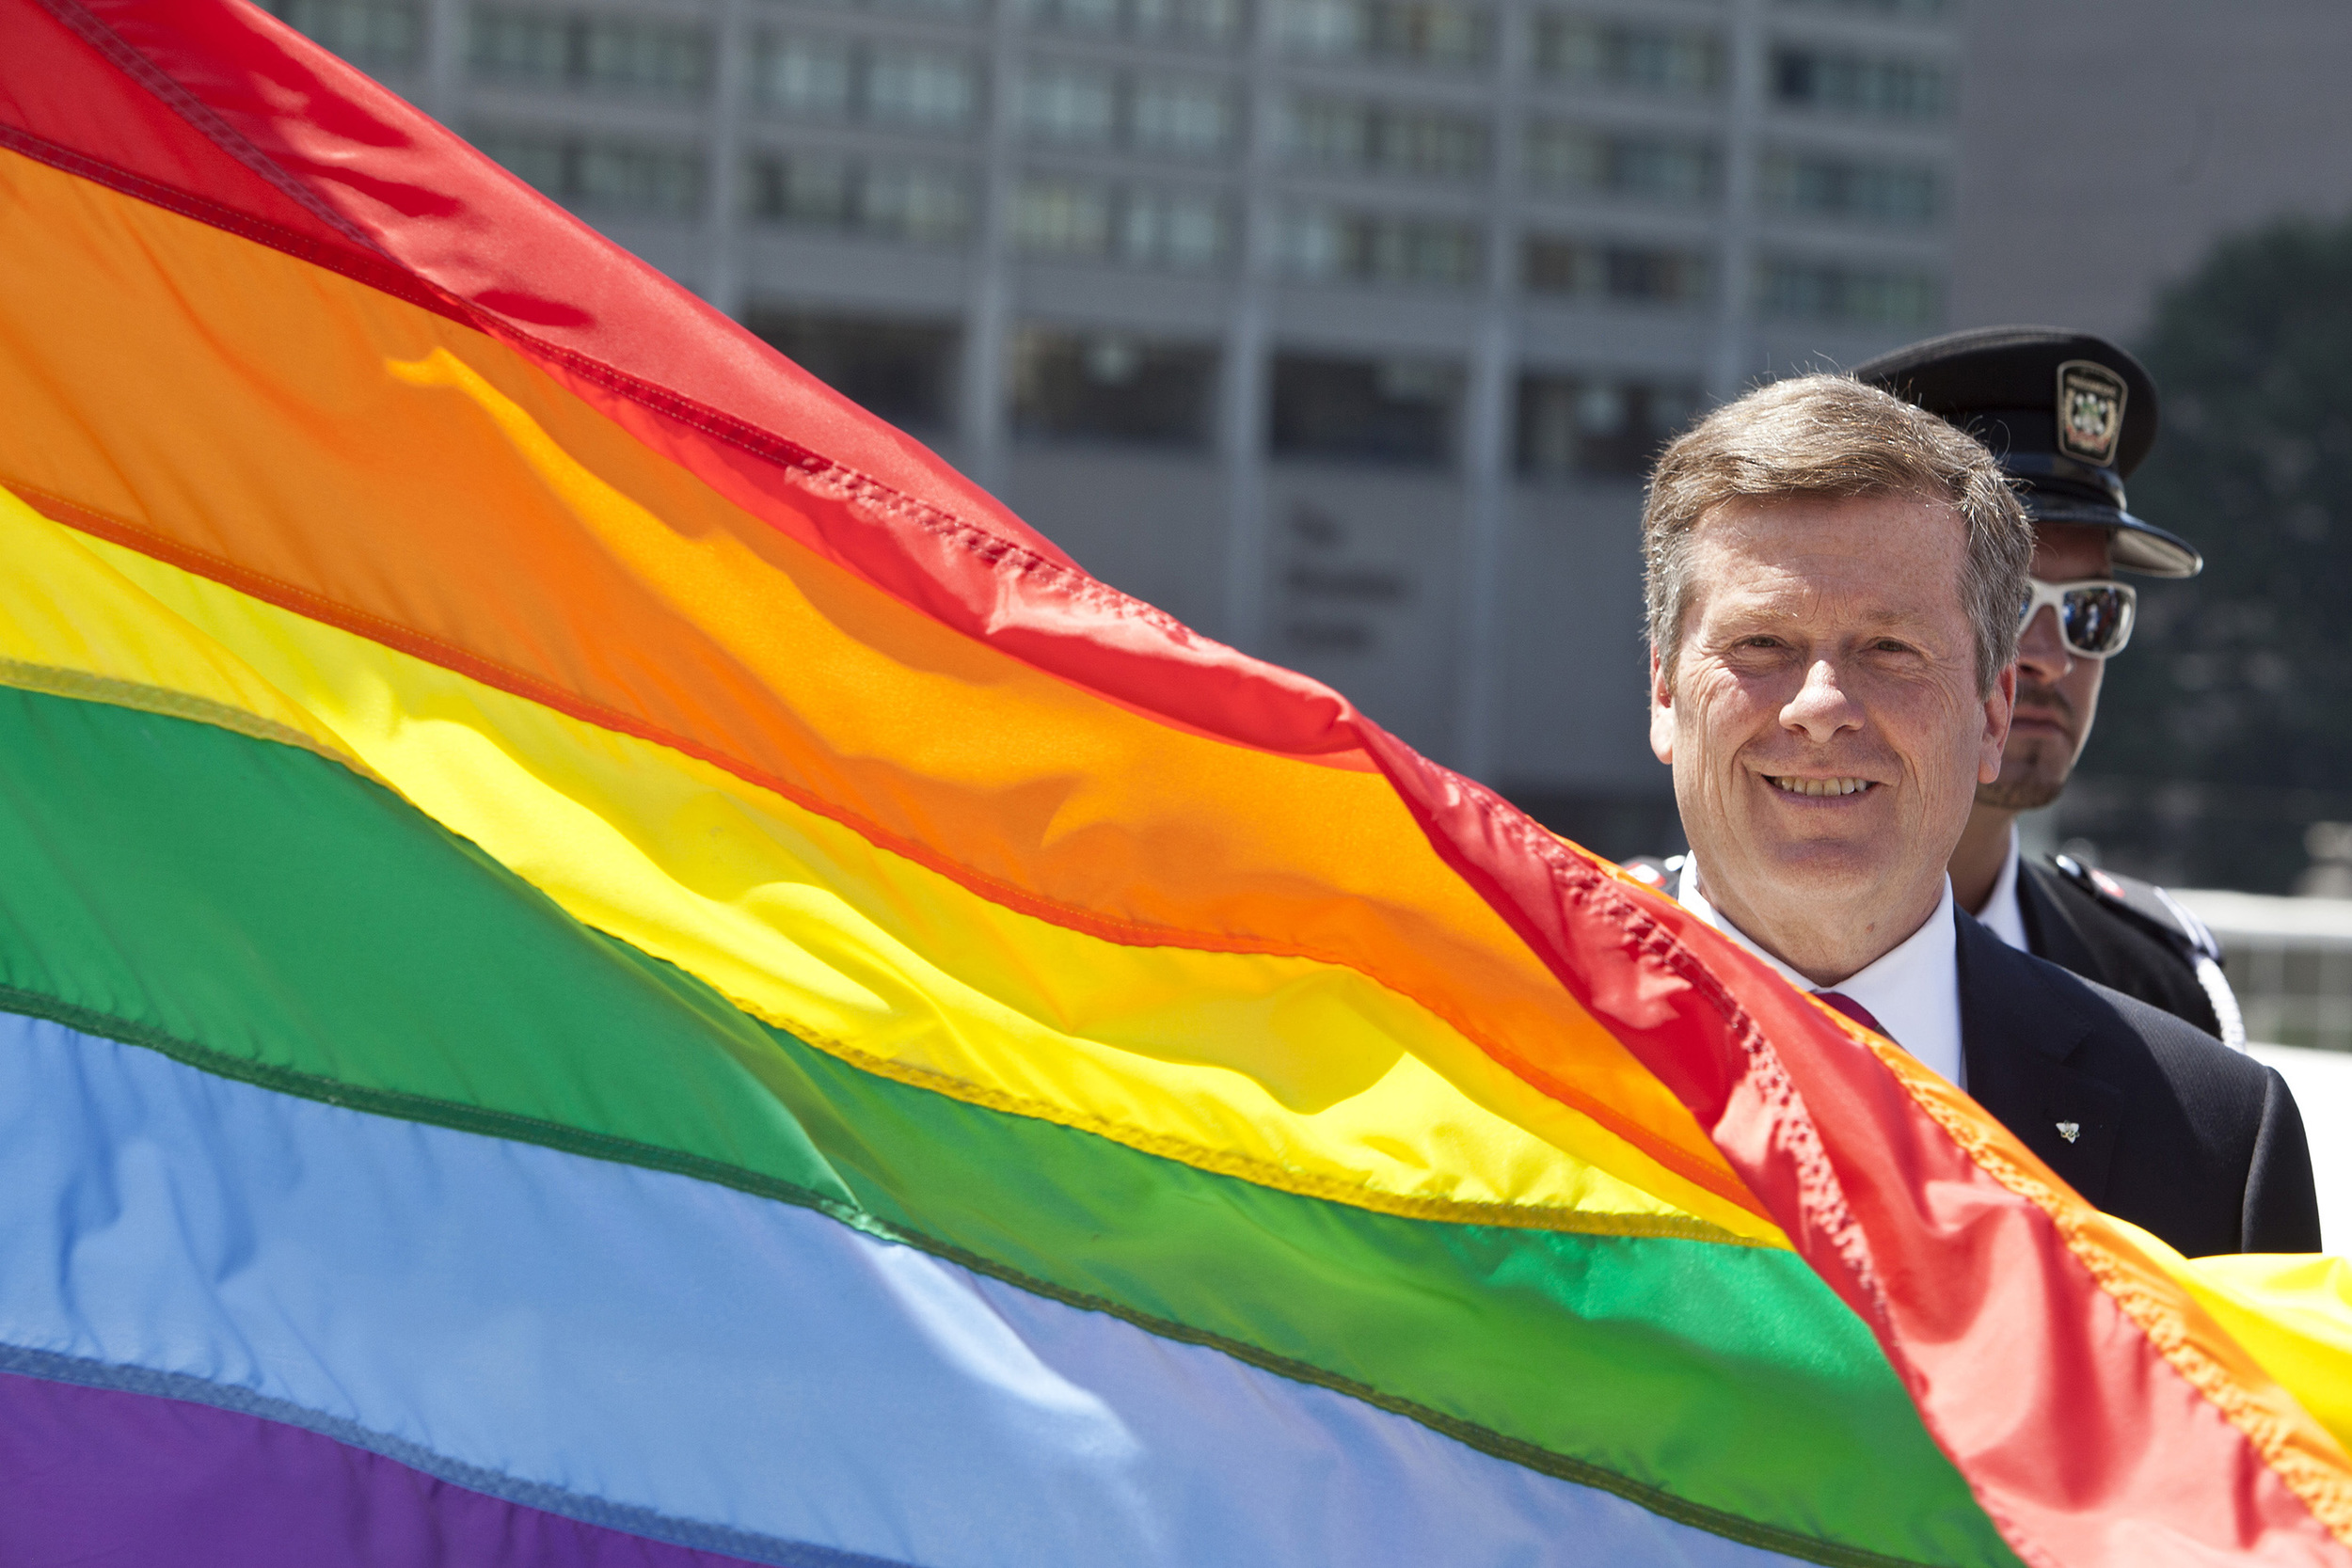 Pride flag raising at Toronto City Hall